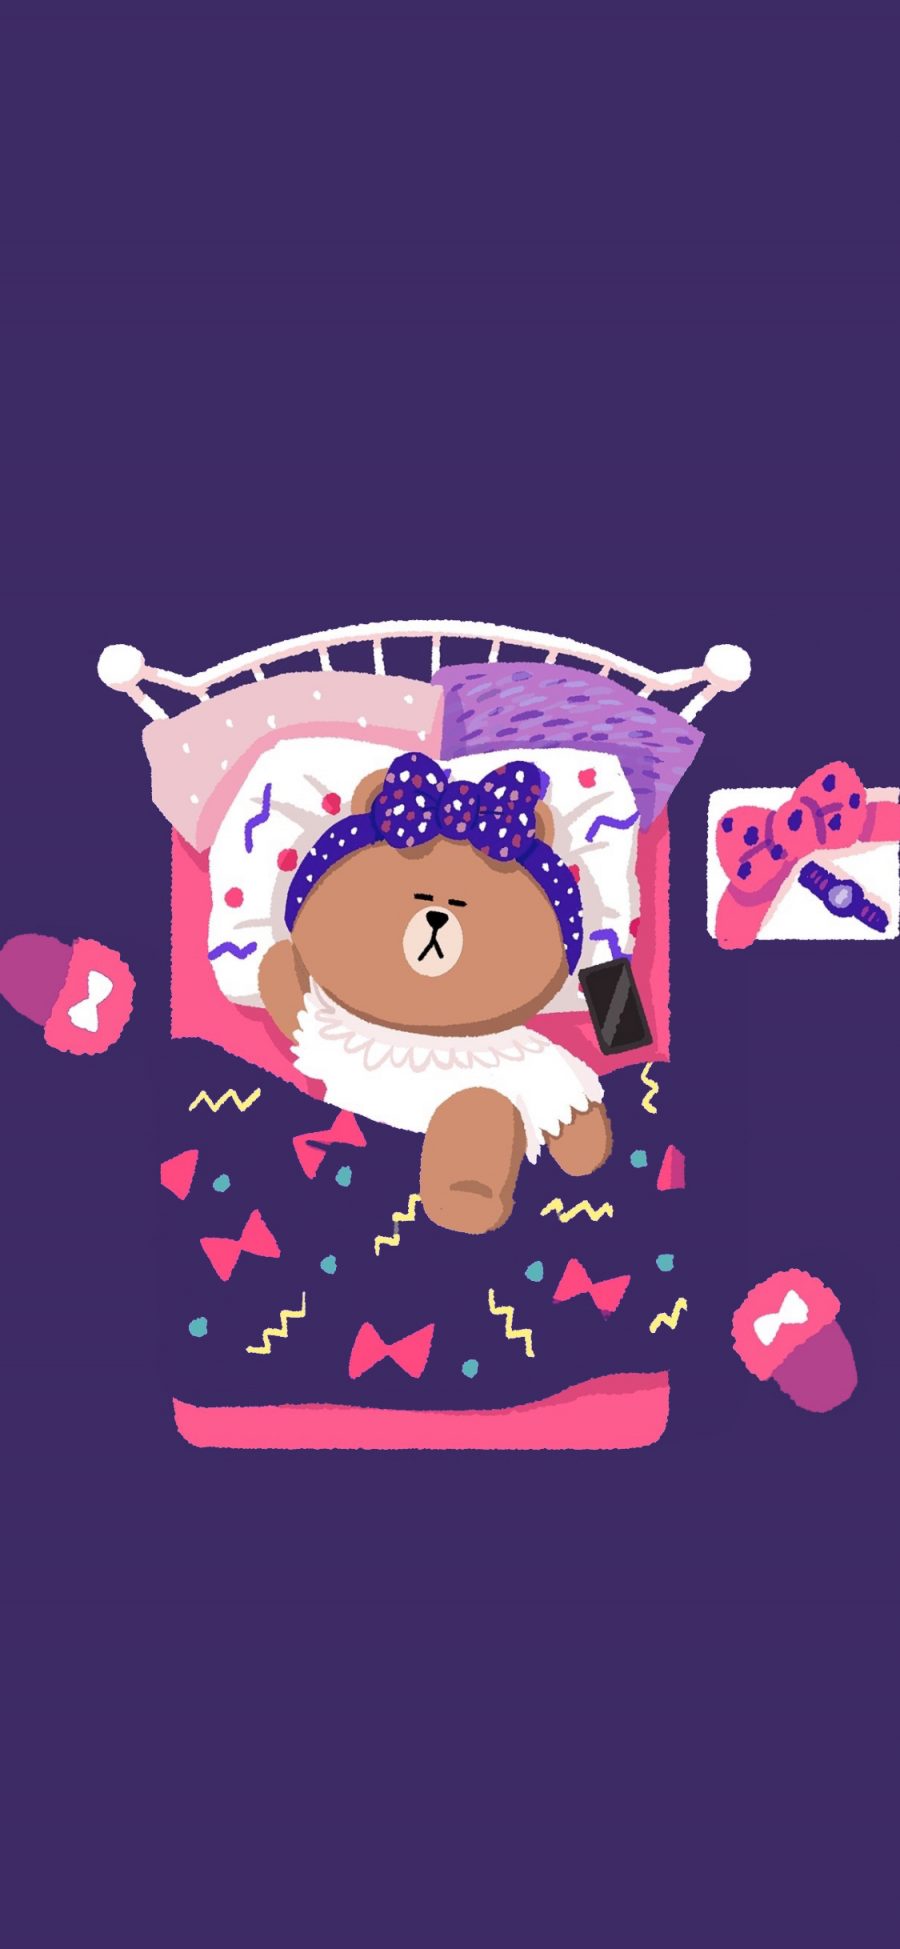 [2436×1125]linefriends 布朗熊 被窝 紫色 卡通 苹果手机动漫壁纸图片